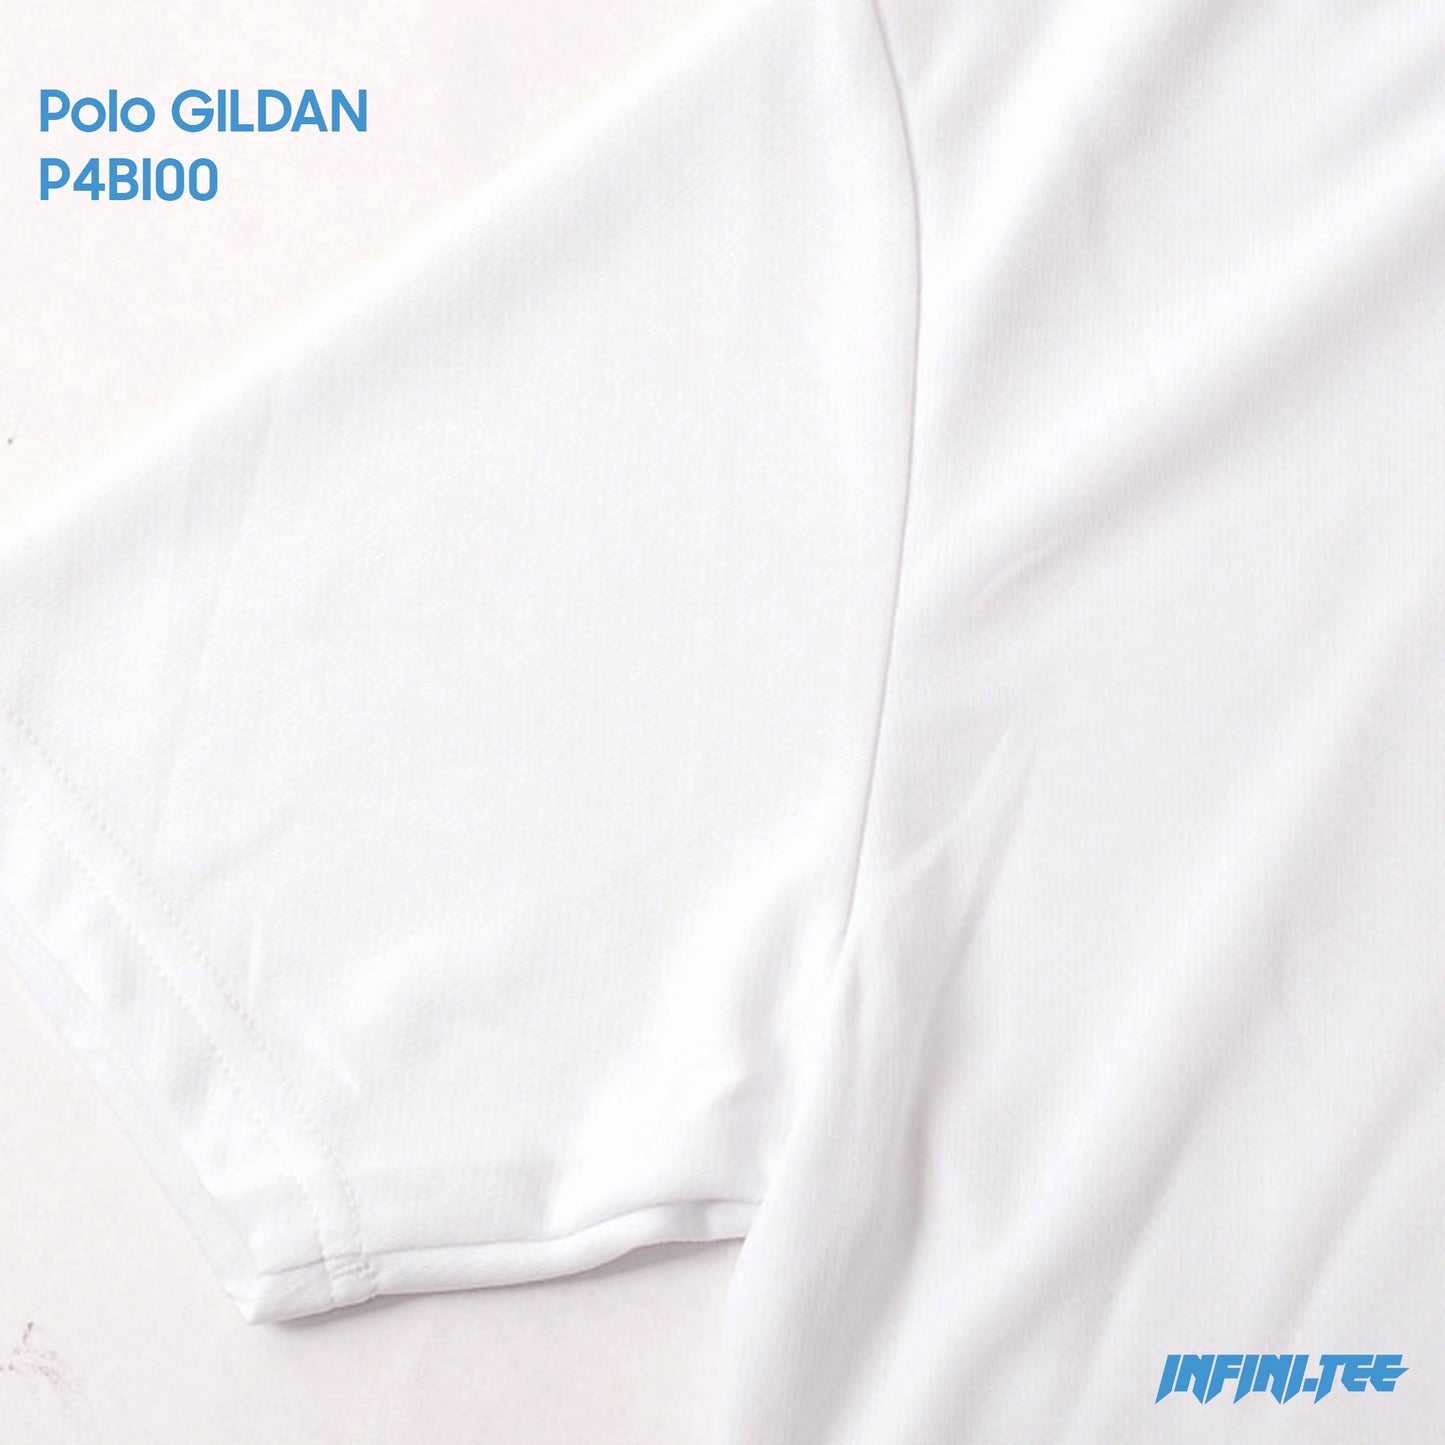 POLO Sport Performance P4BI00 GILDAN - WHITE